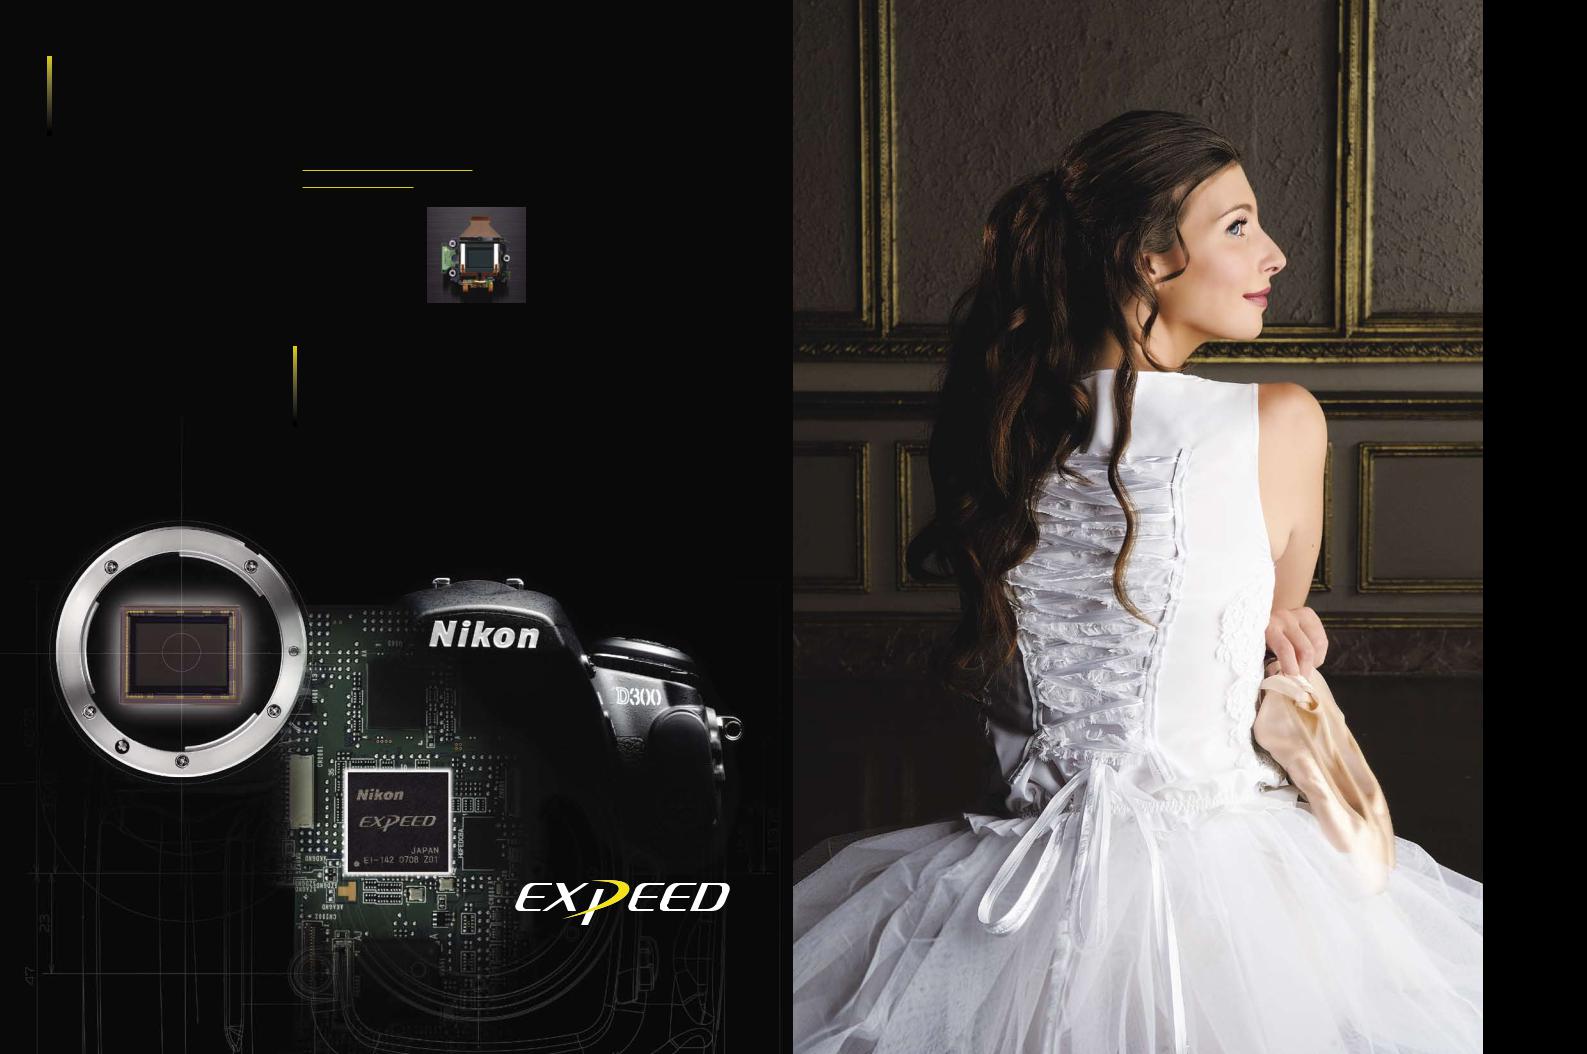 Nikon D300s Body, D3000 Body, D3000 Manual